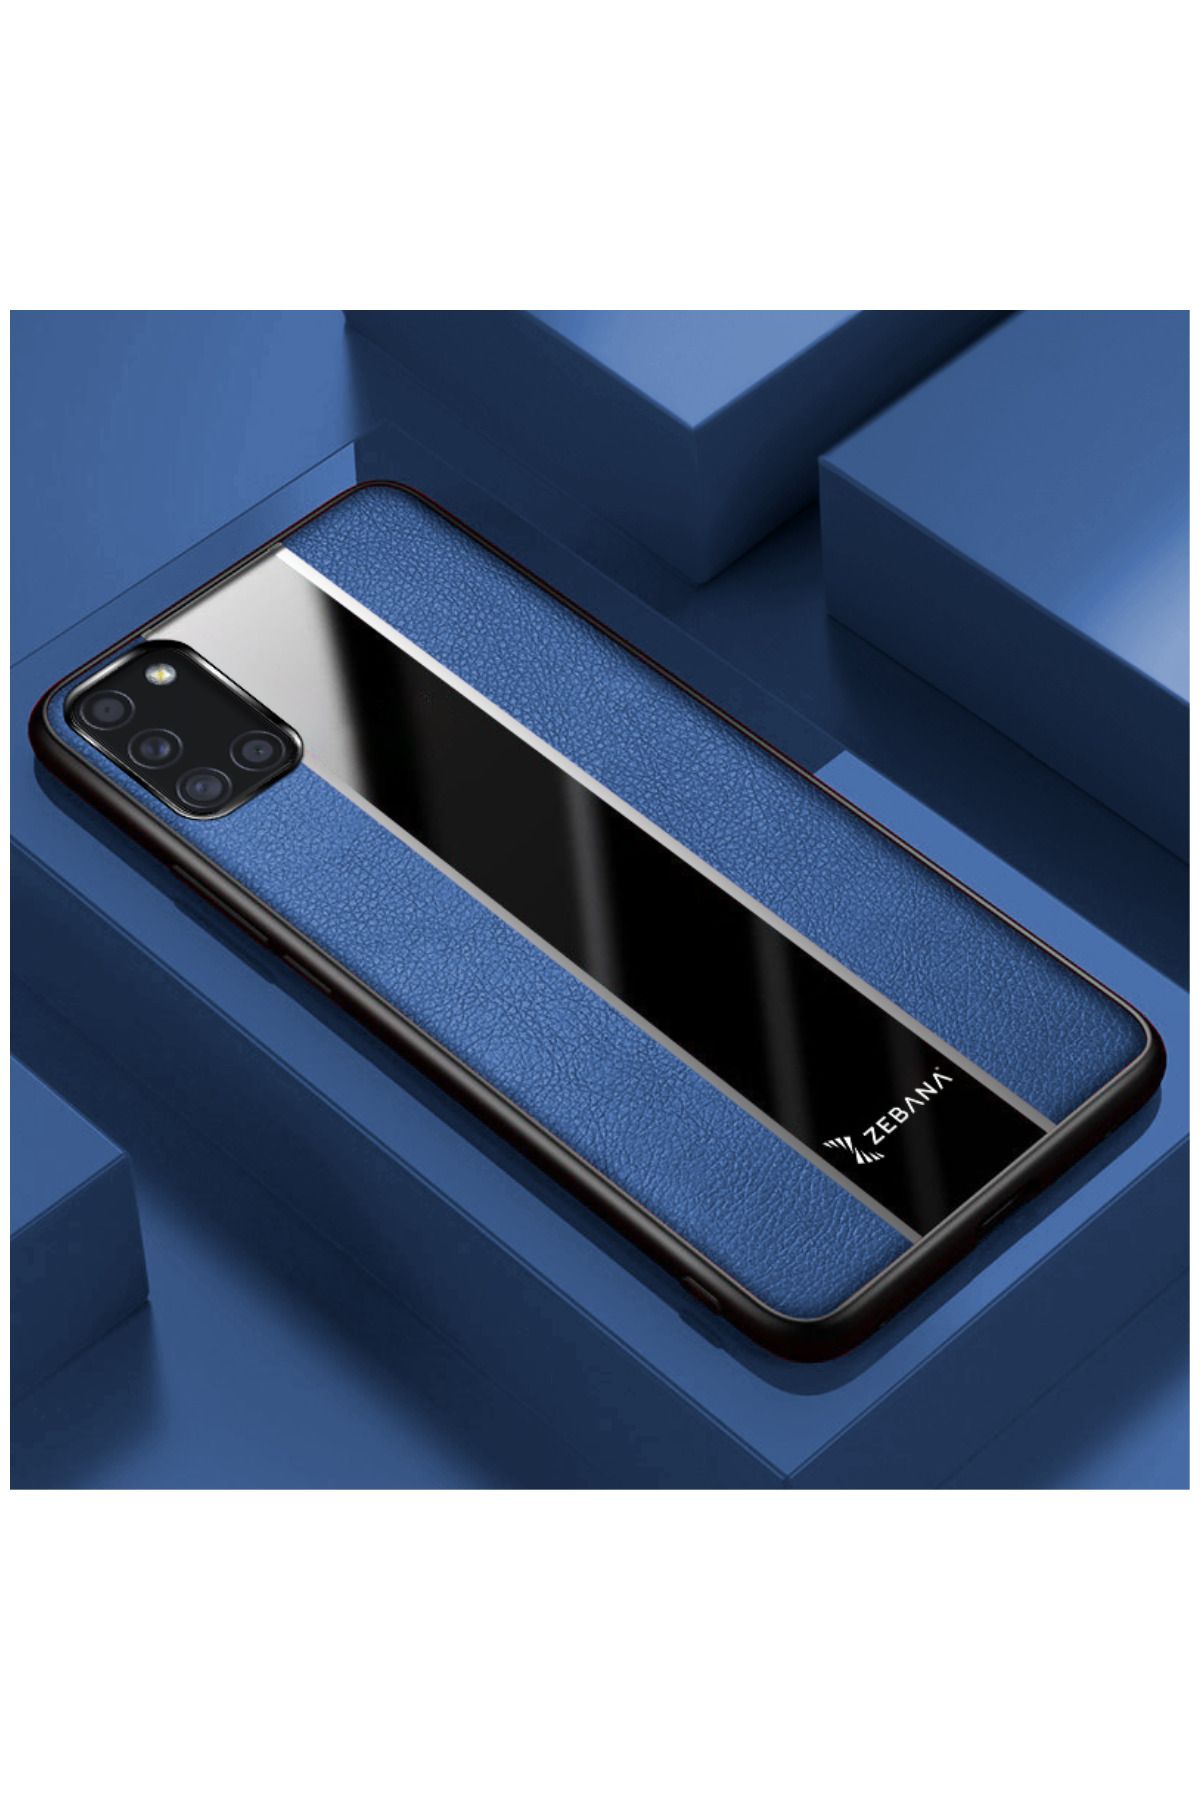 Dara Aksesuar Samsung Galaxy A31 Uyumlu Kılıf Zebana Premium Deri Kılıf Mavi